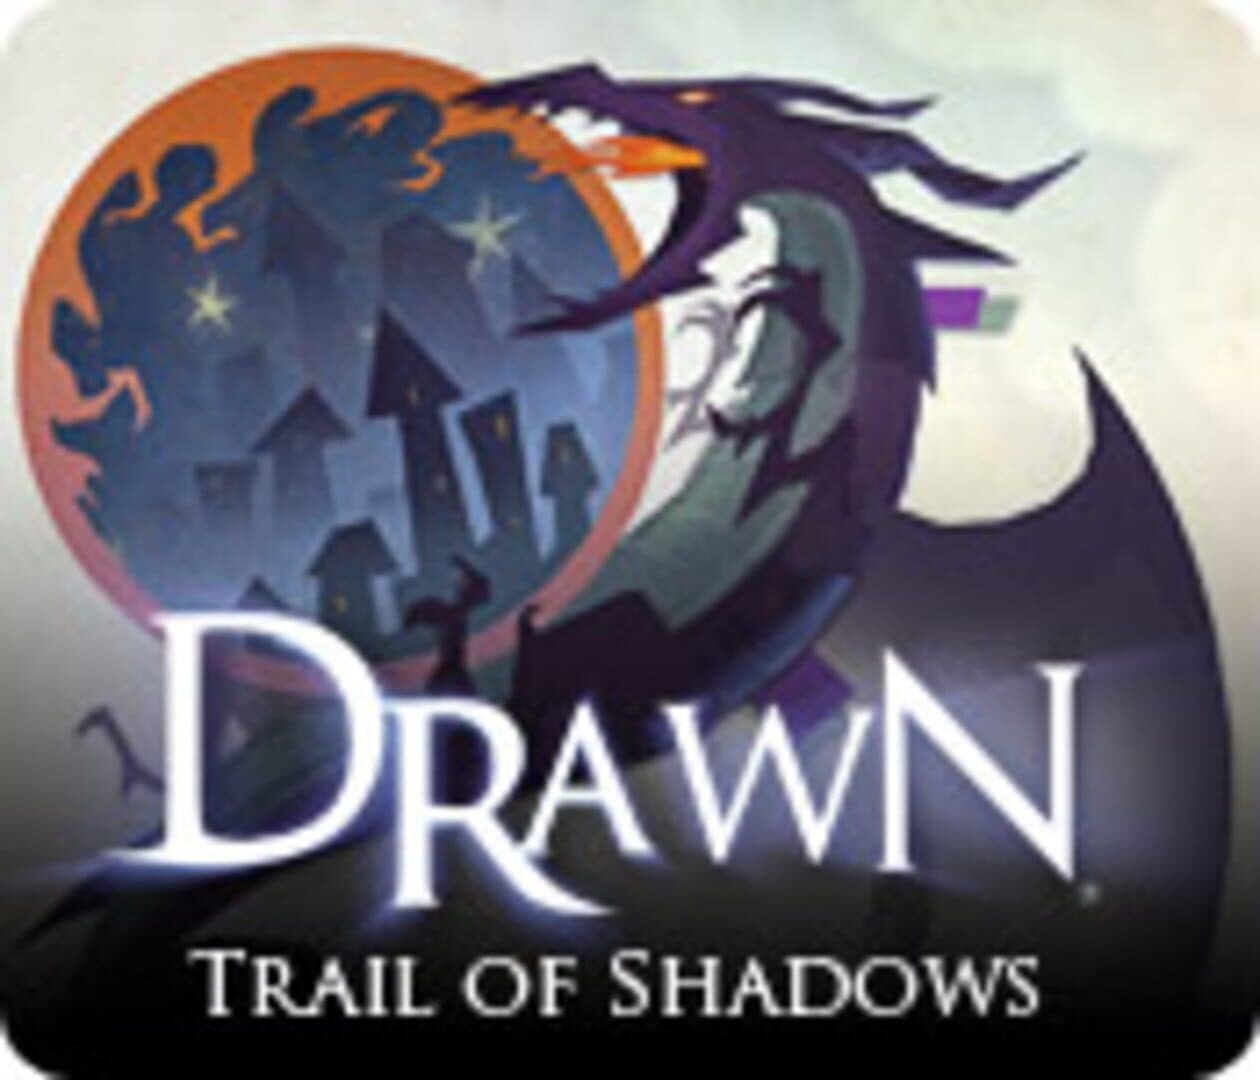 Drawn: Trail of Shadows cover art